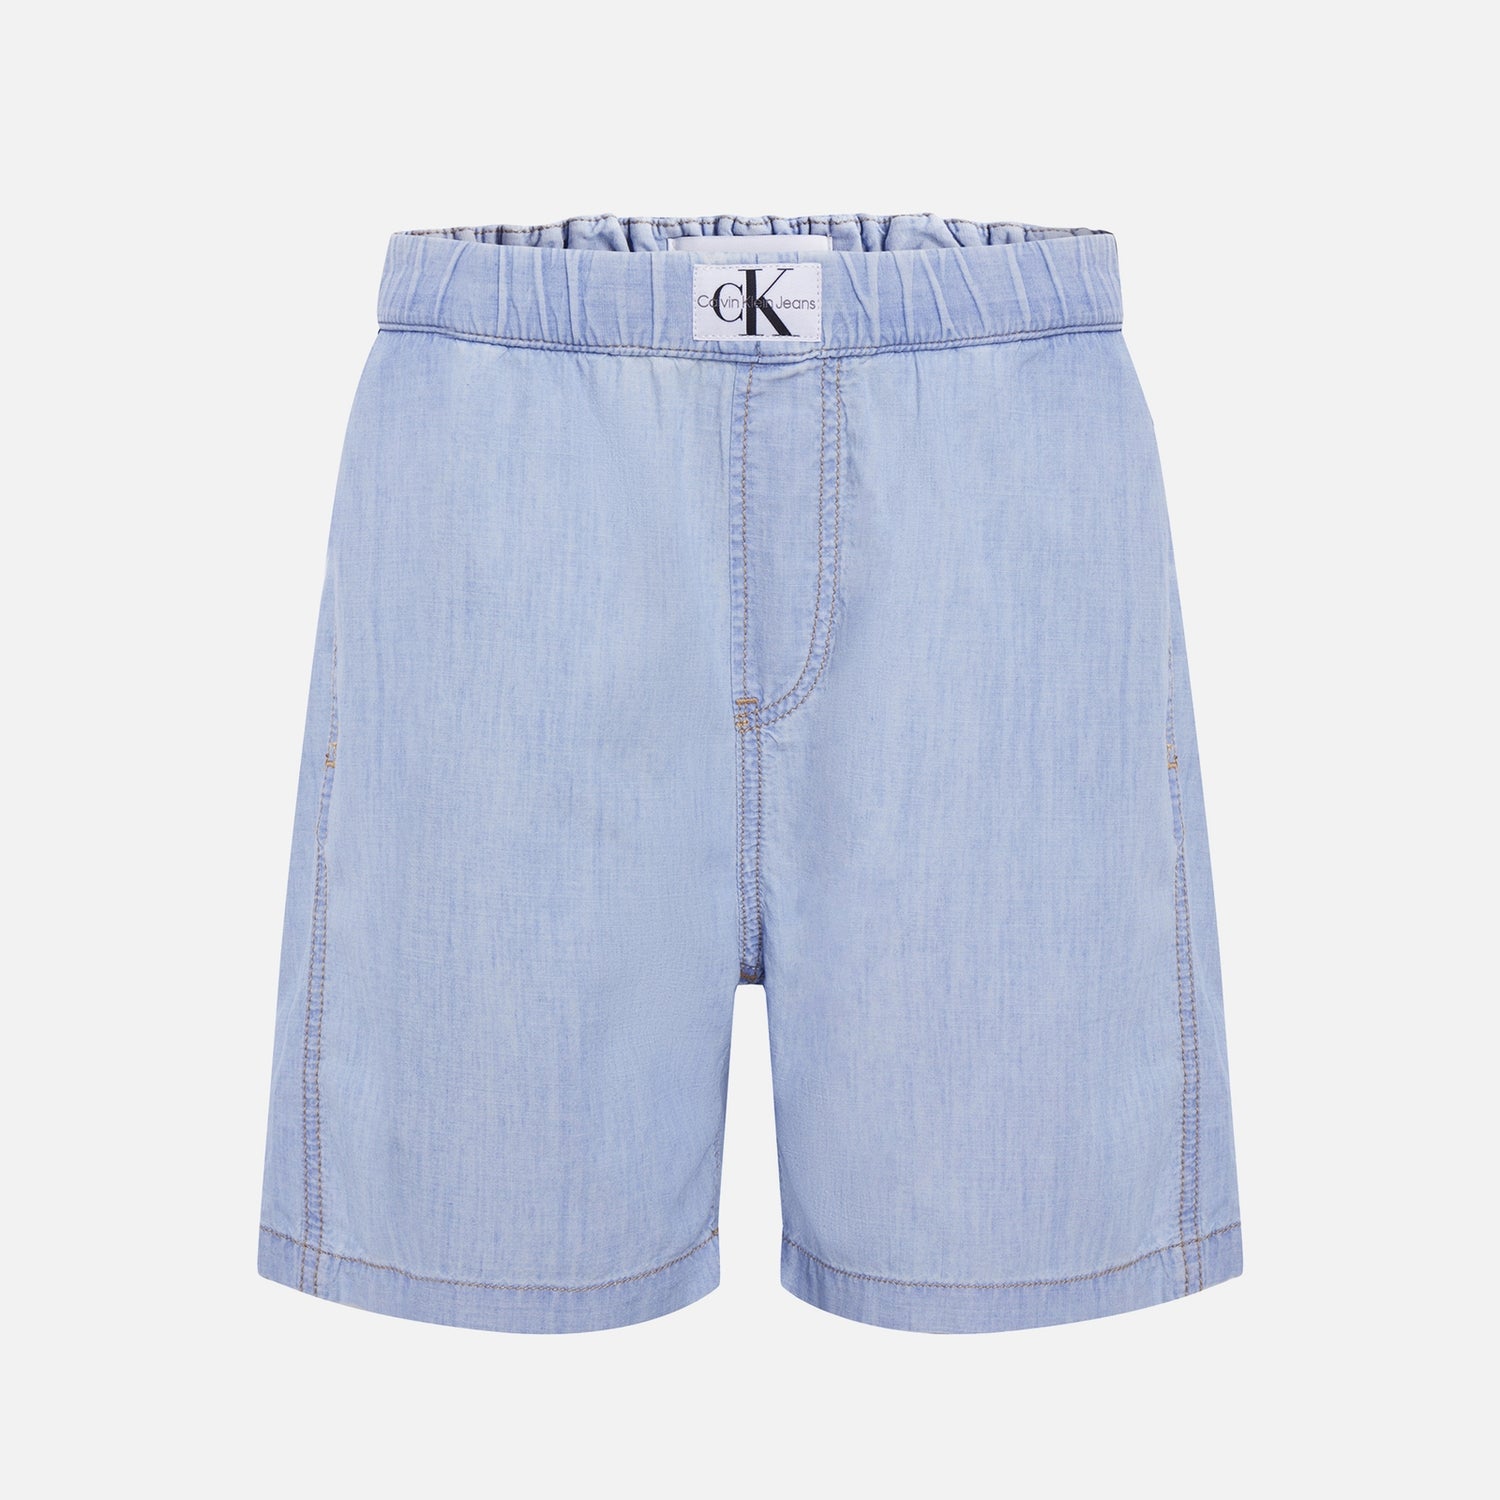 Calvin Klein Jeans Denim Boxer Shorts - W30